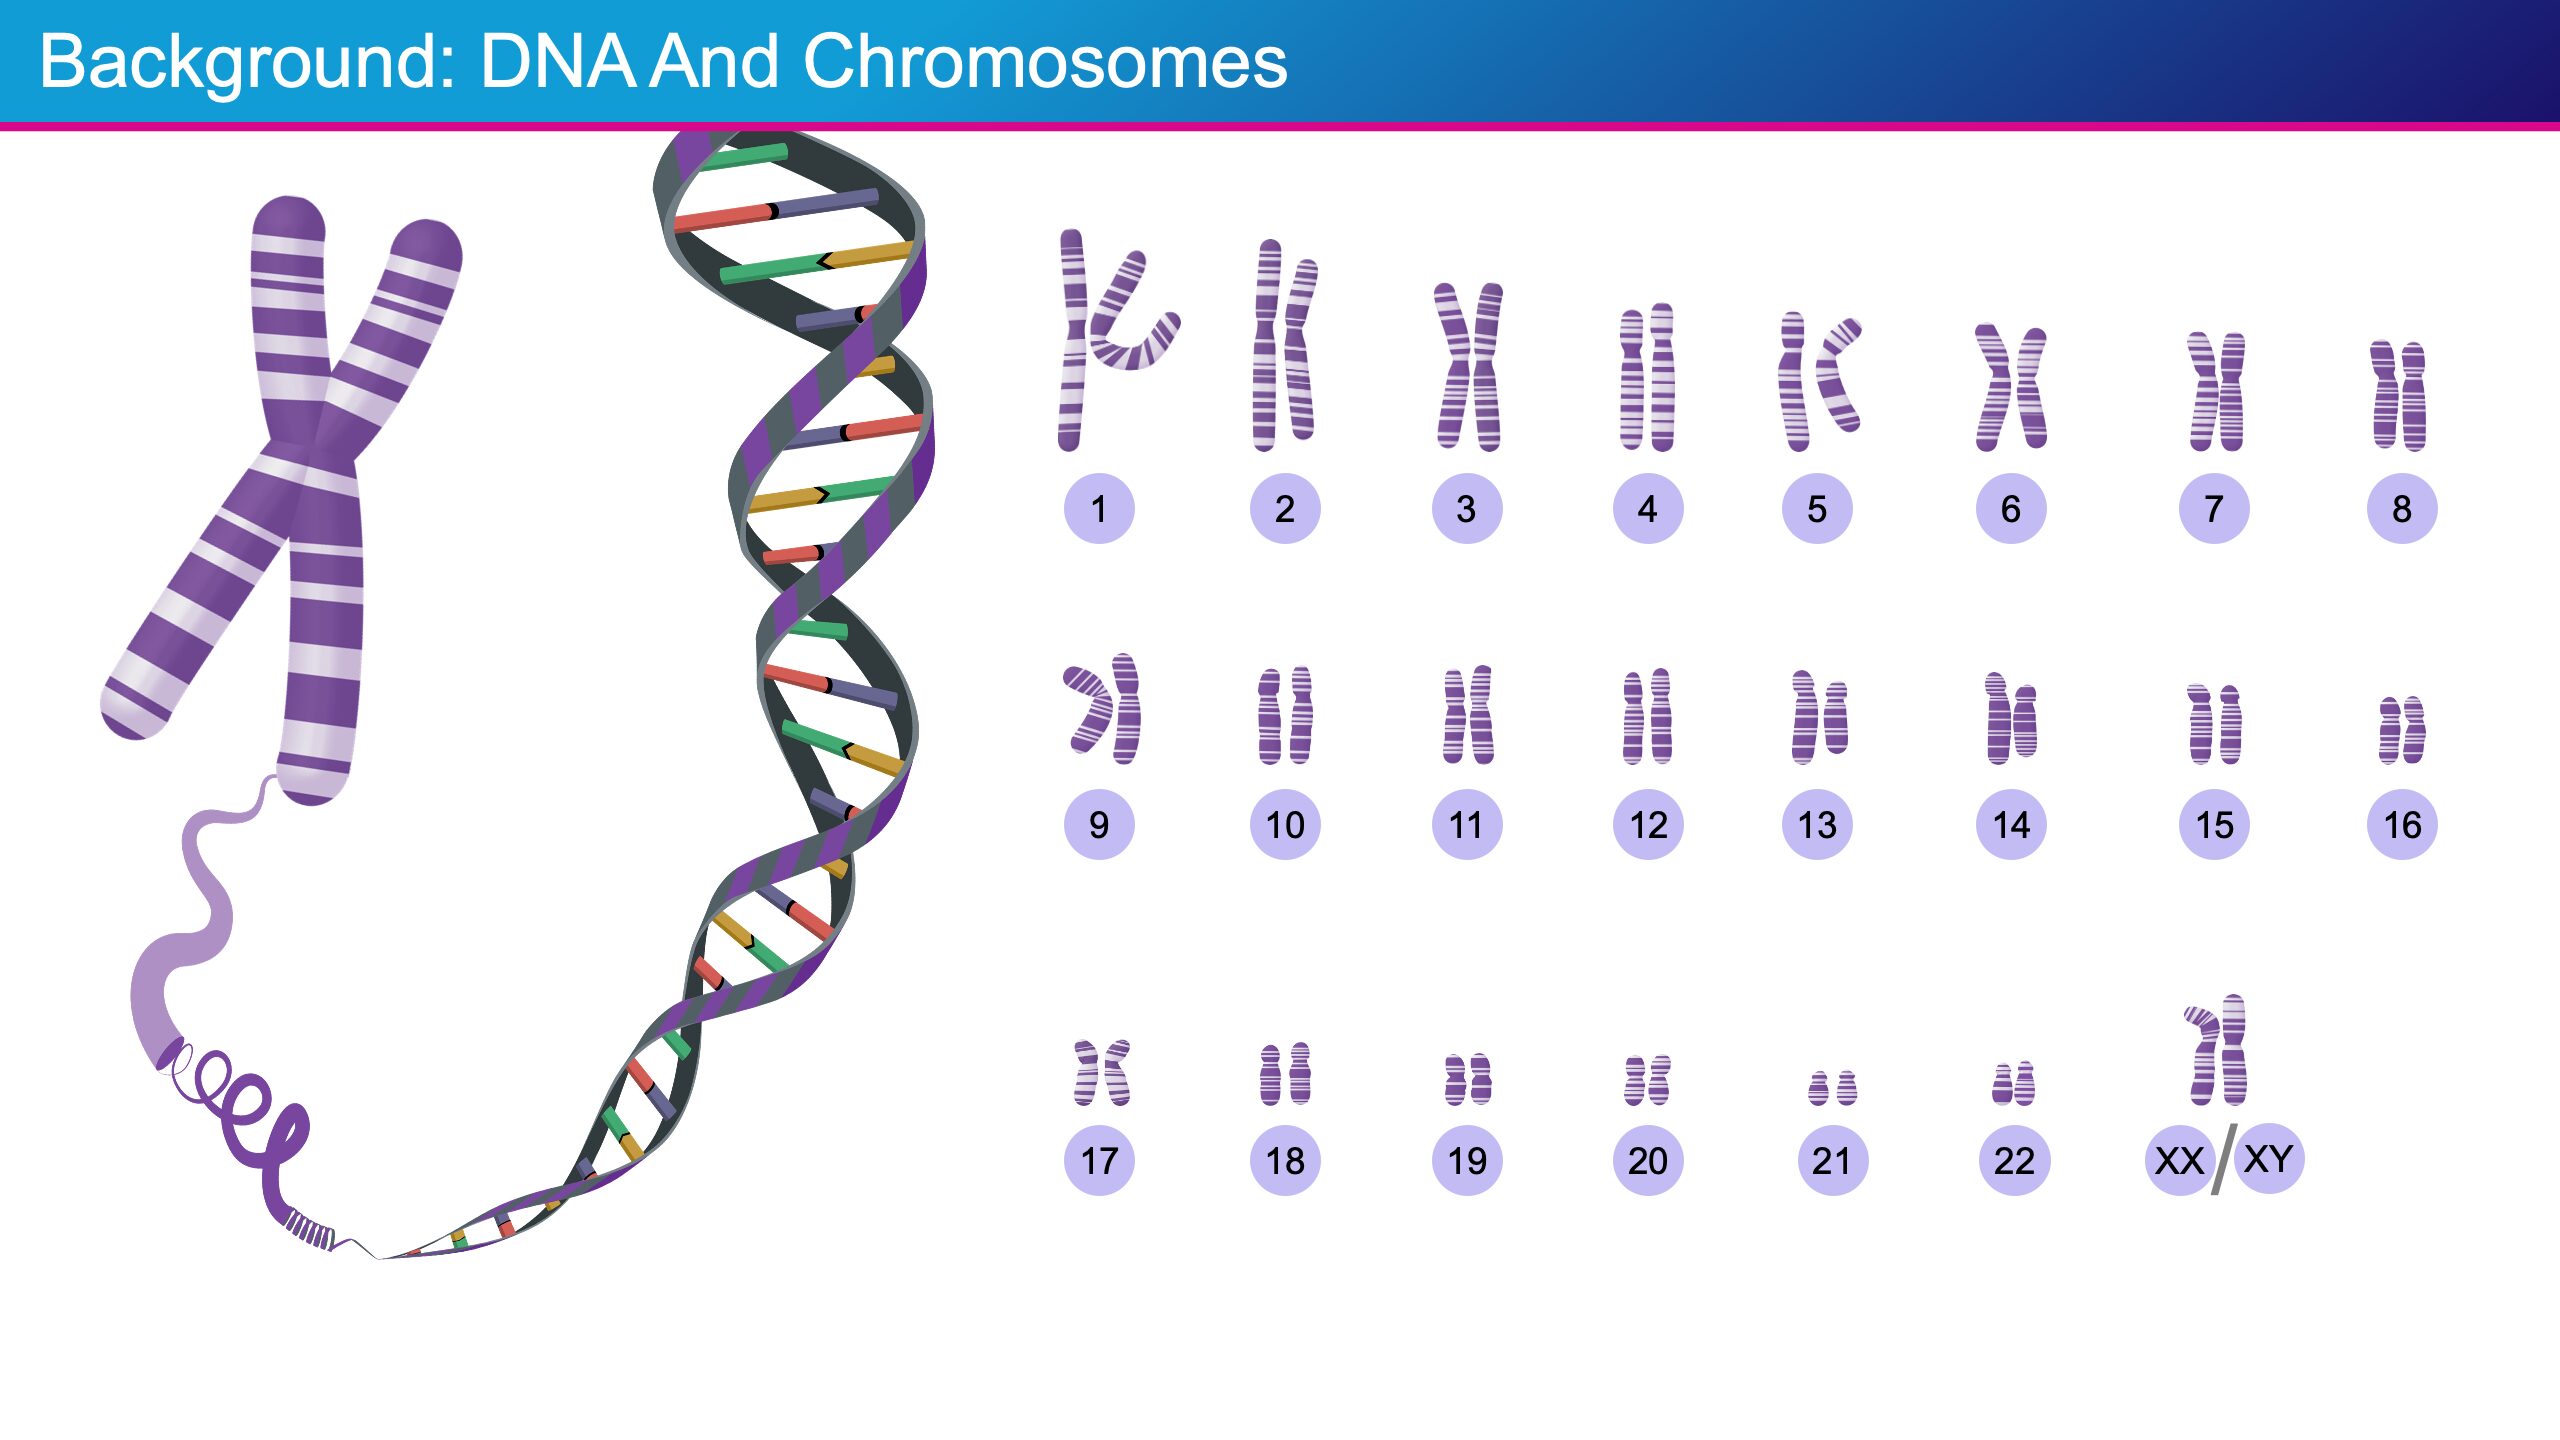 DNA and Chromosomes